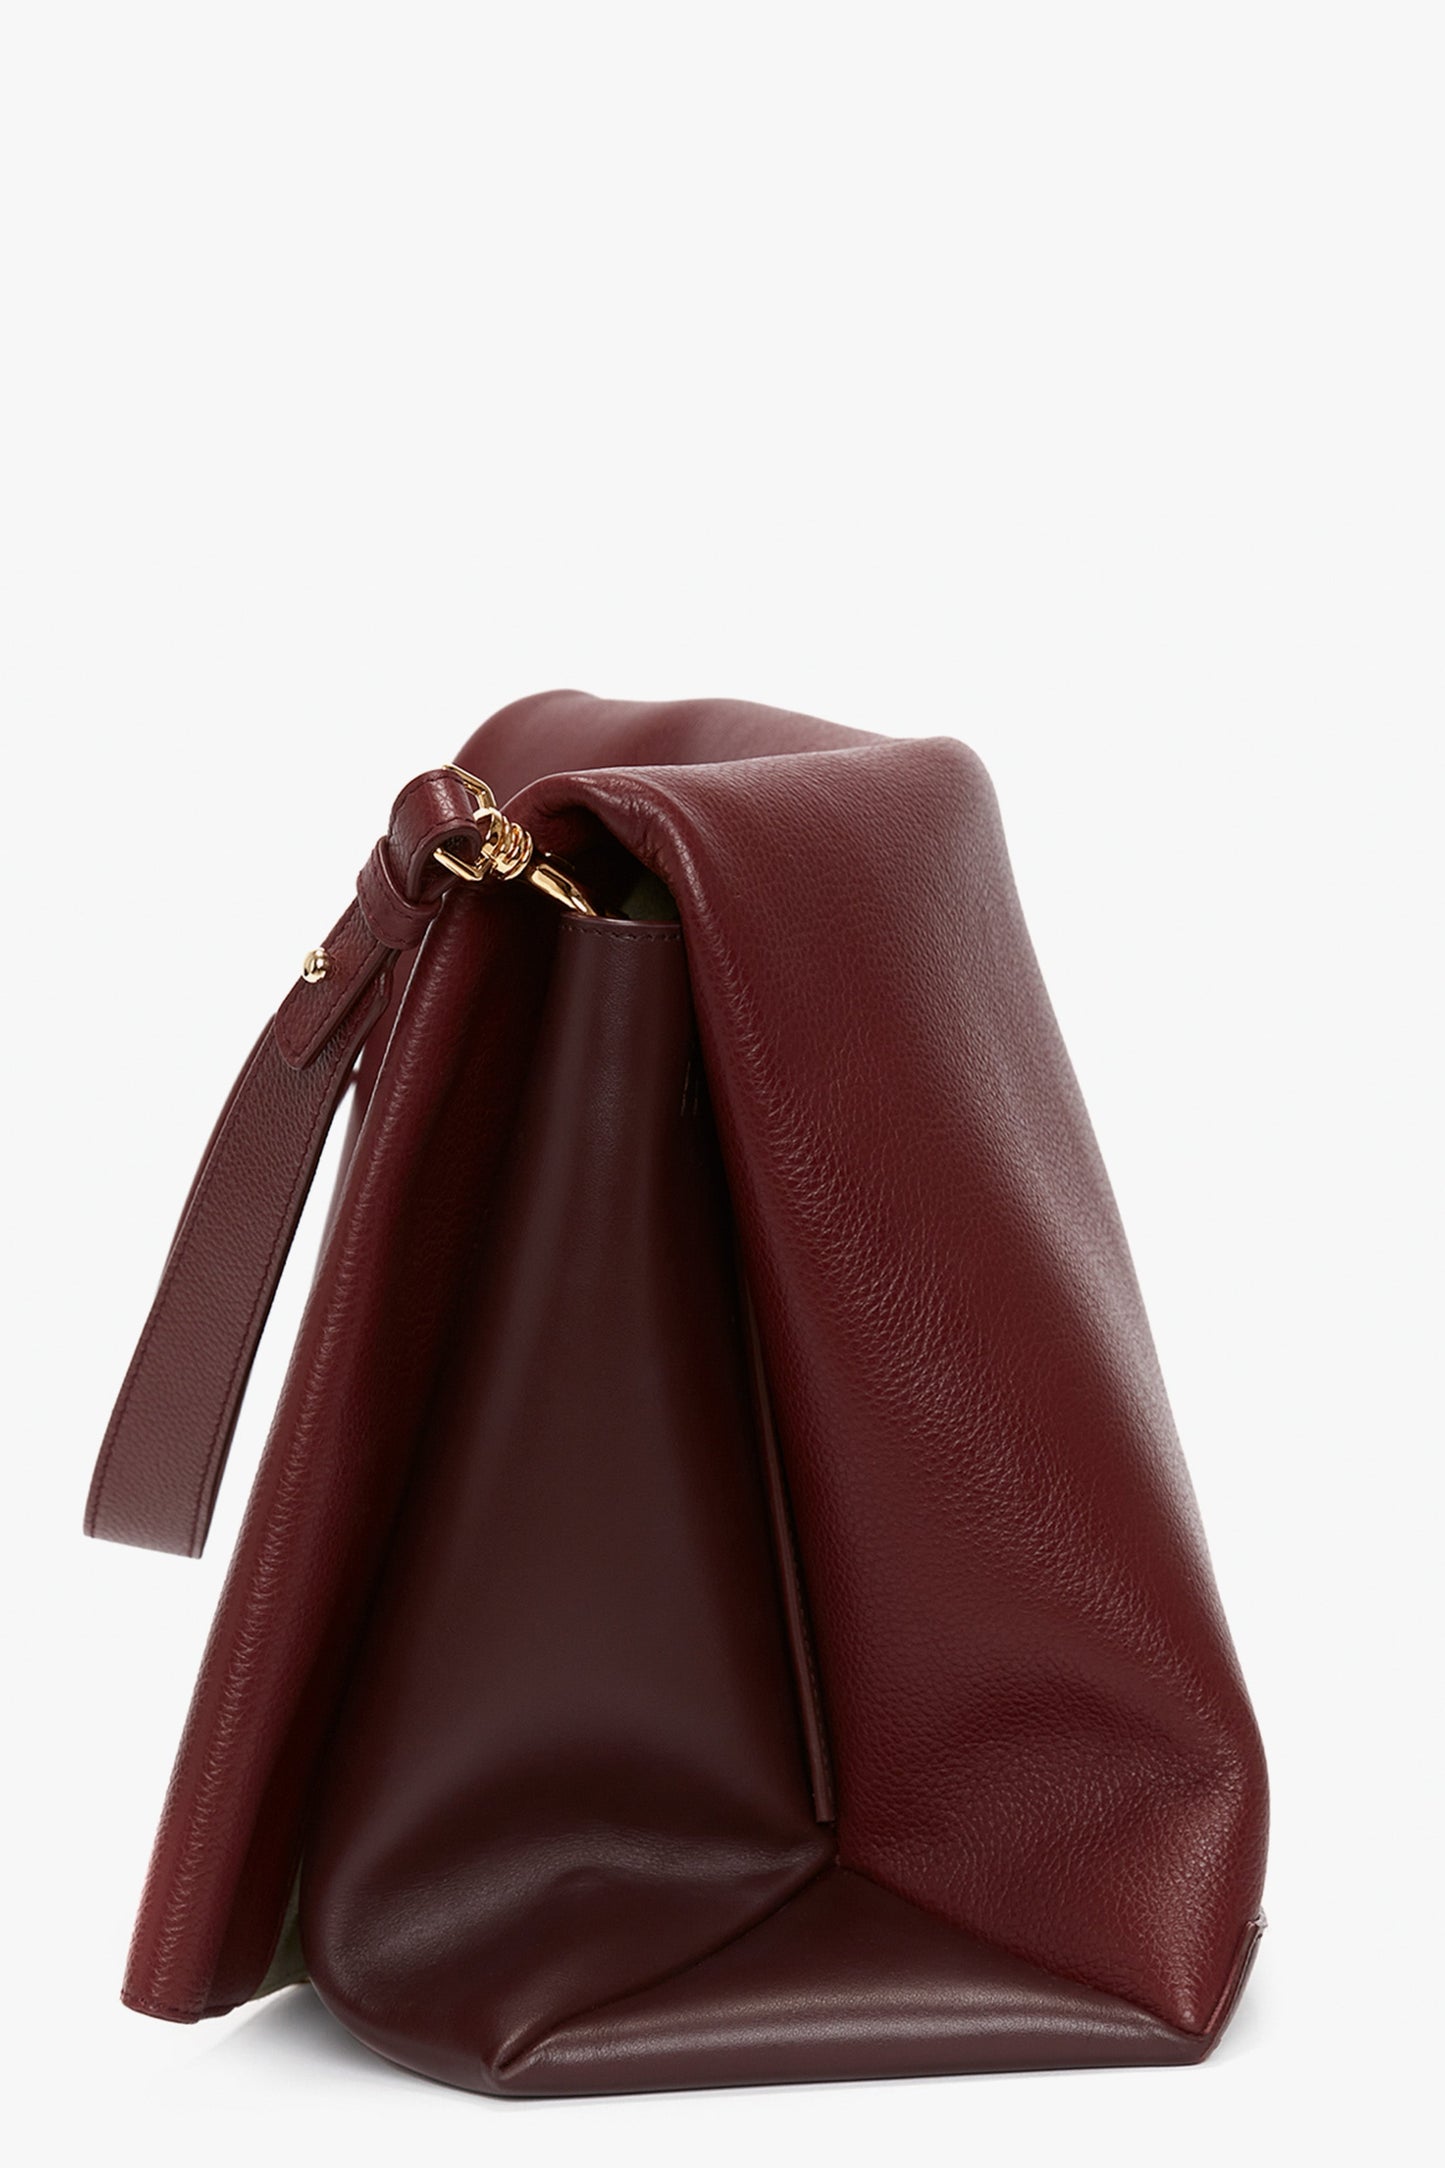 Leather Cross Body Bag, Burgundy Leather Shoulder Bag, Women's Leather  Crossbody Bag, Leather Bag KF-4658 - Etsy Israel